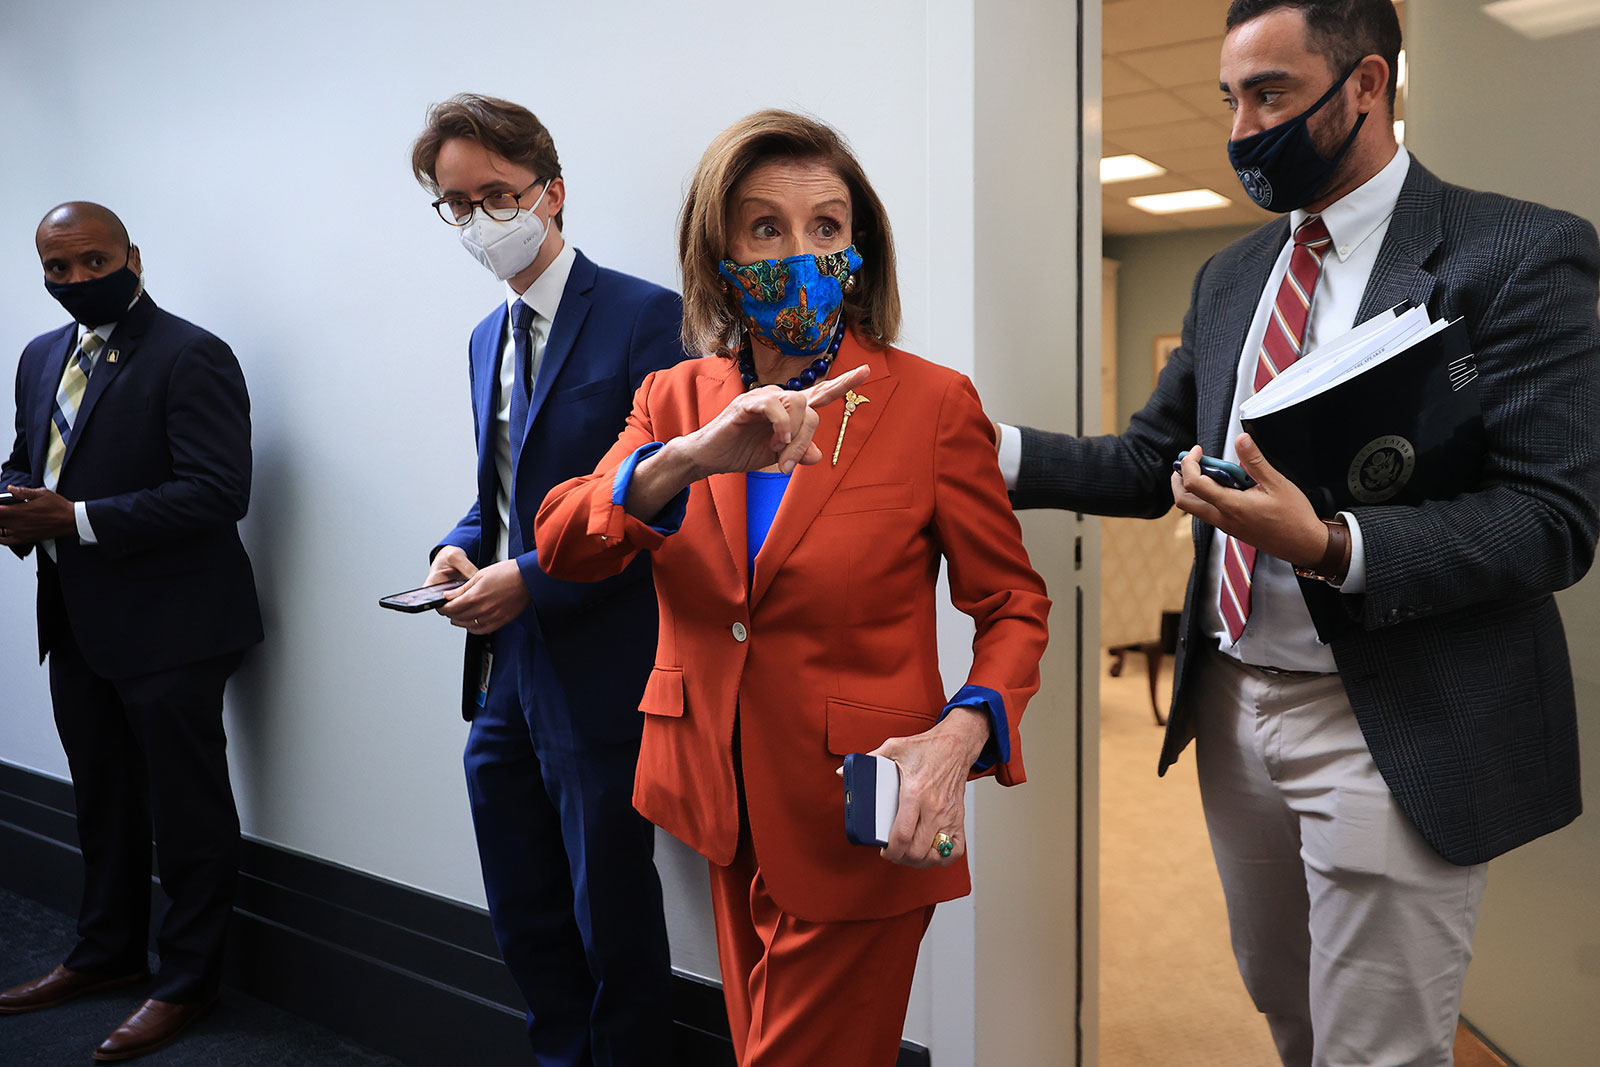 House Speaker Nancy Pelosi walks through the halls of the US Capitol on Wednesday.